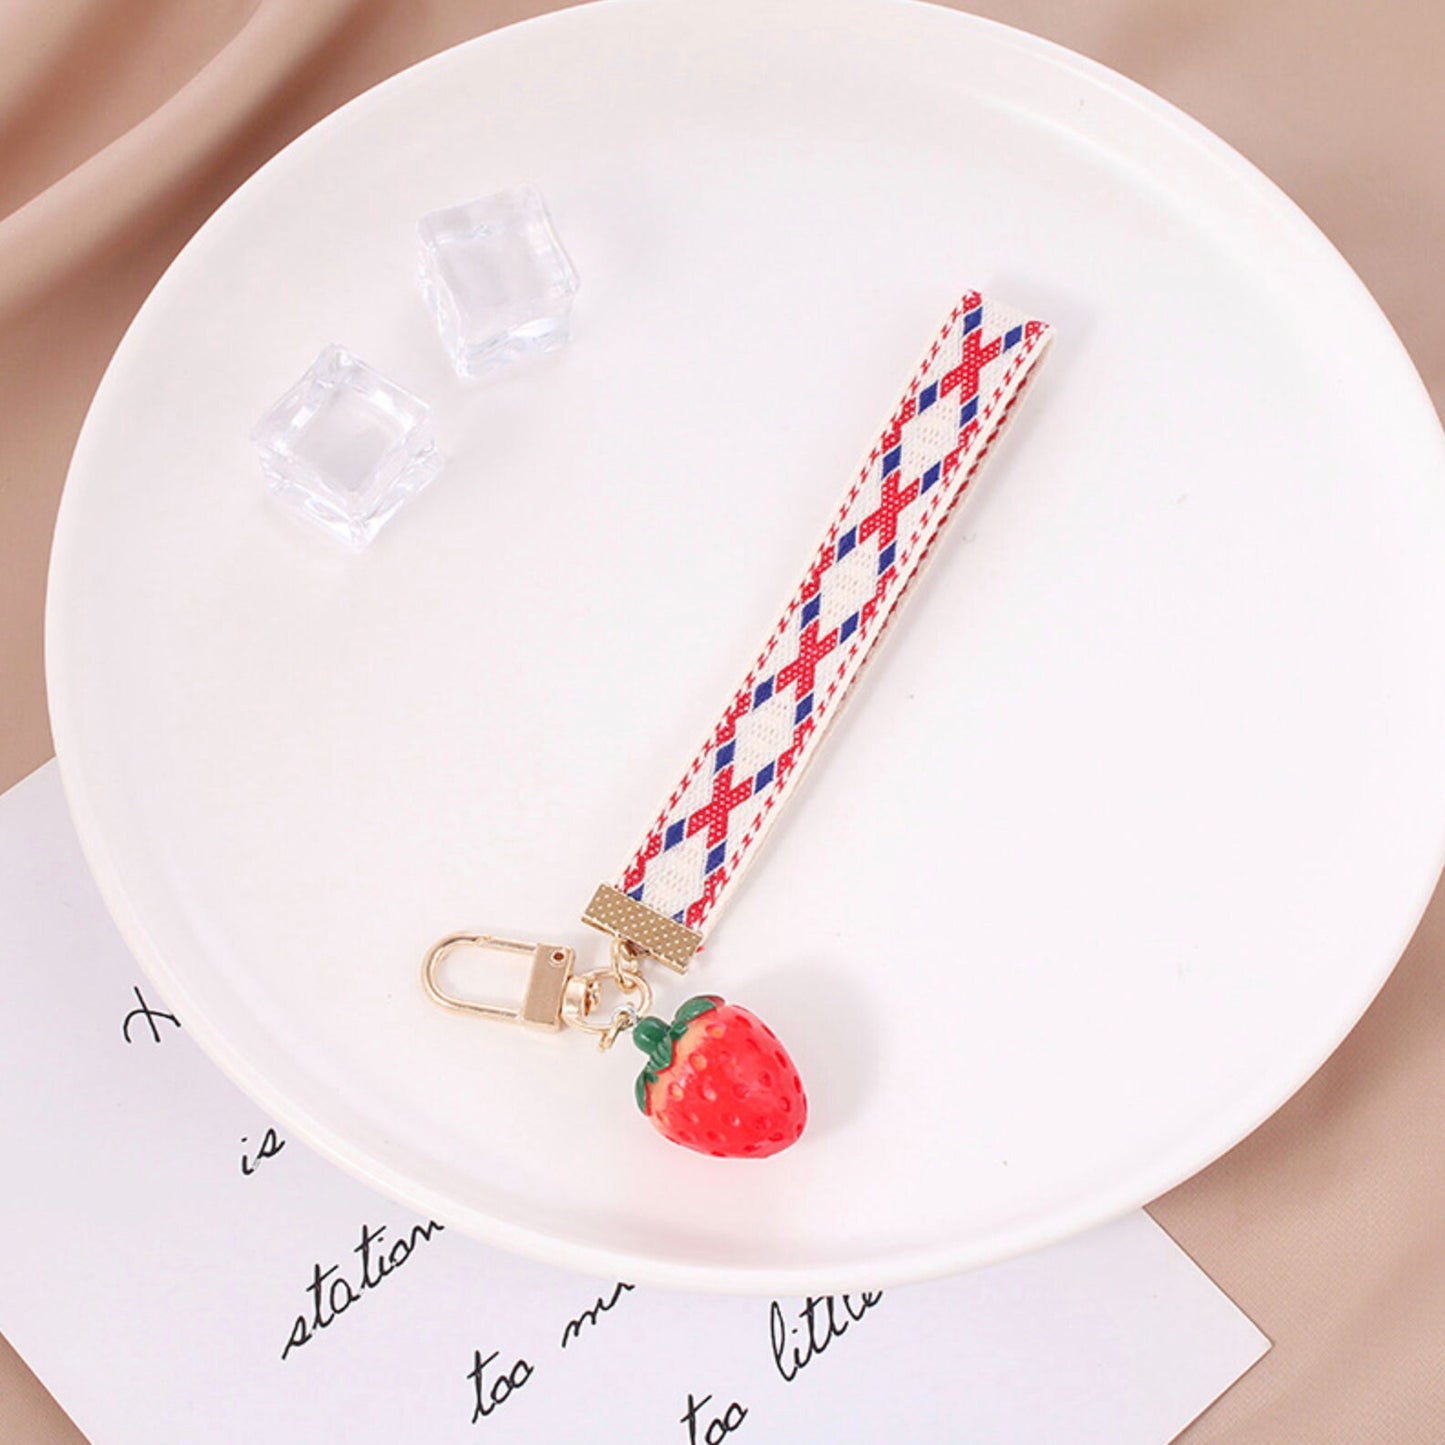 Cute Acrylic Strawberry with Fabric Strap Chain Keychain, Key ring